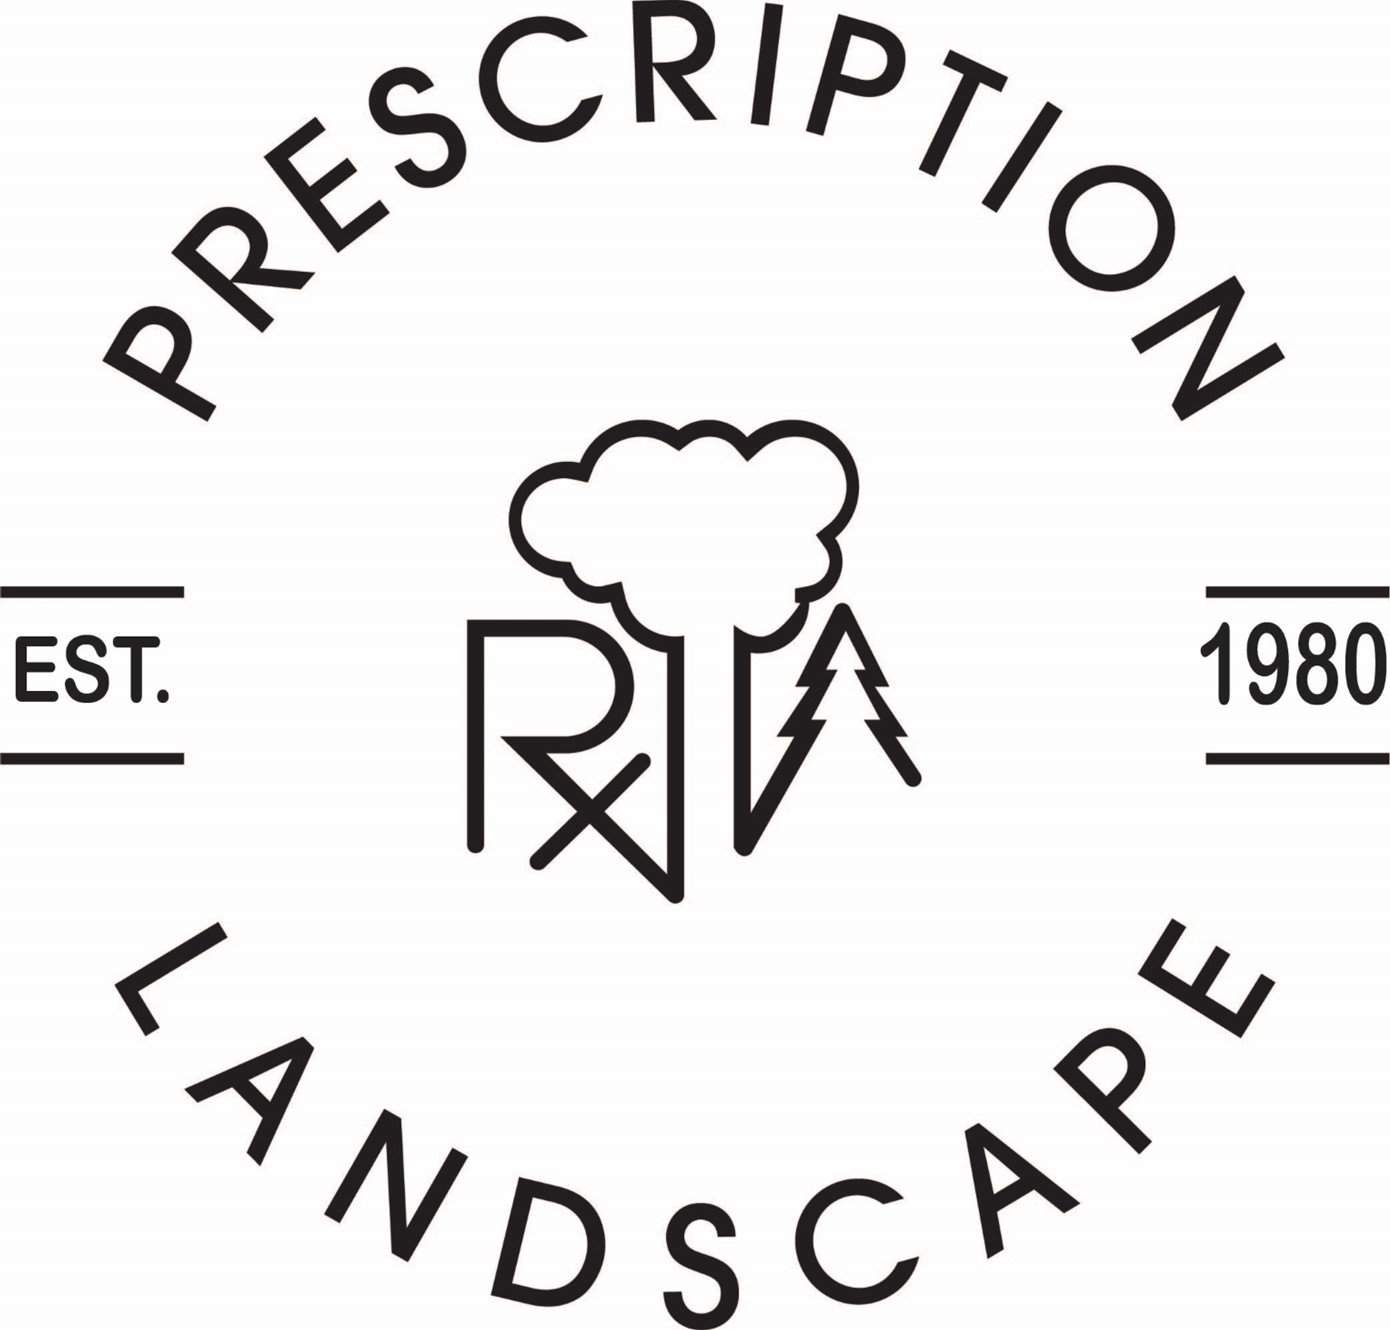 Prescription Landscape logo smaller